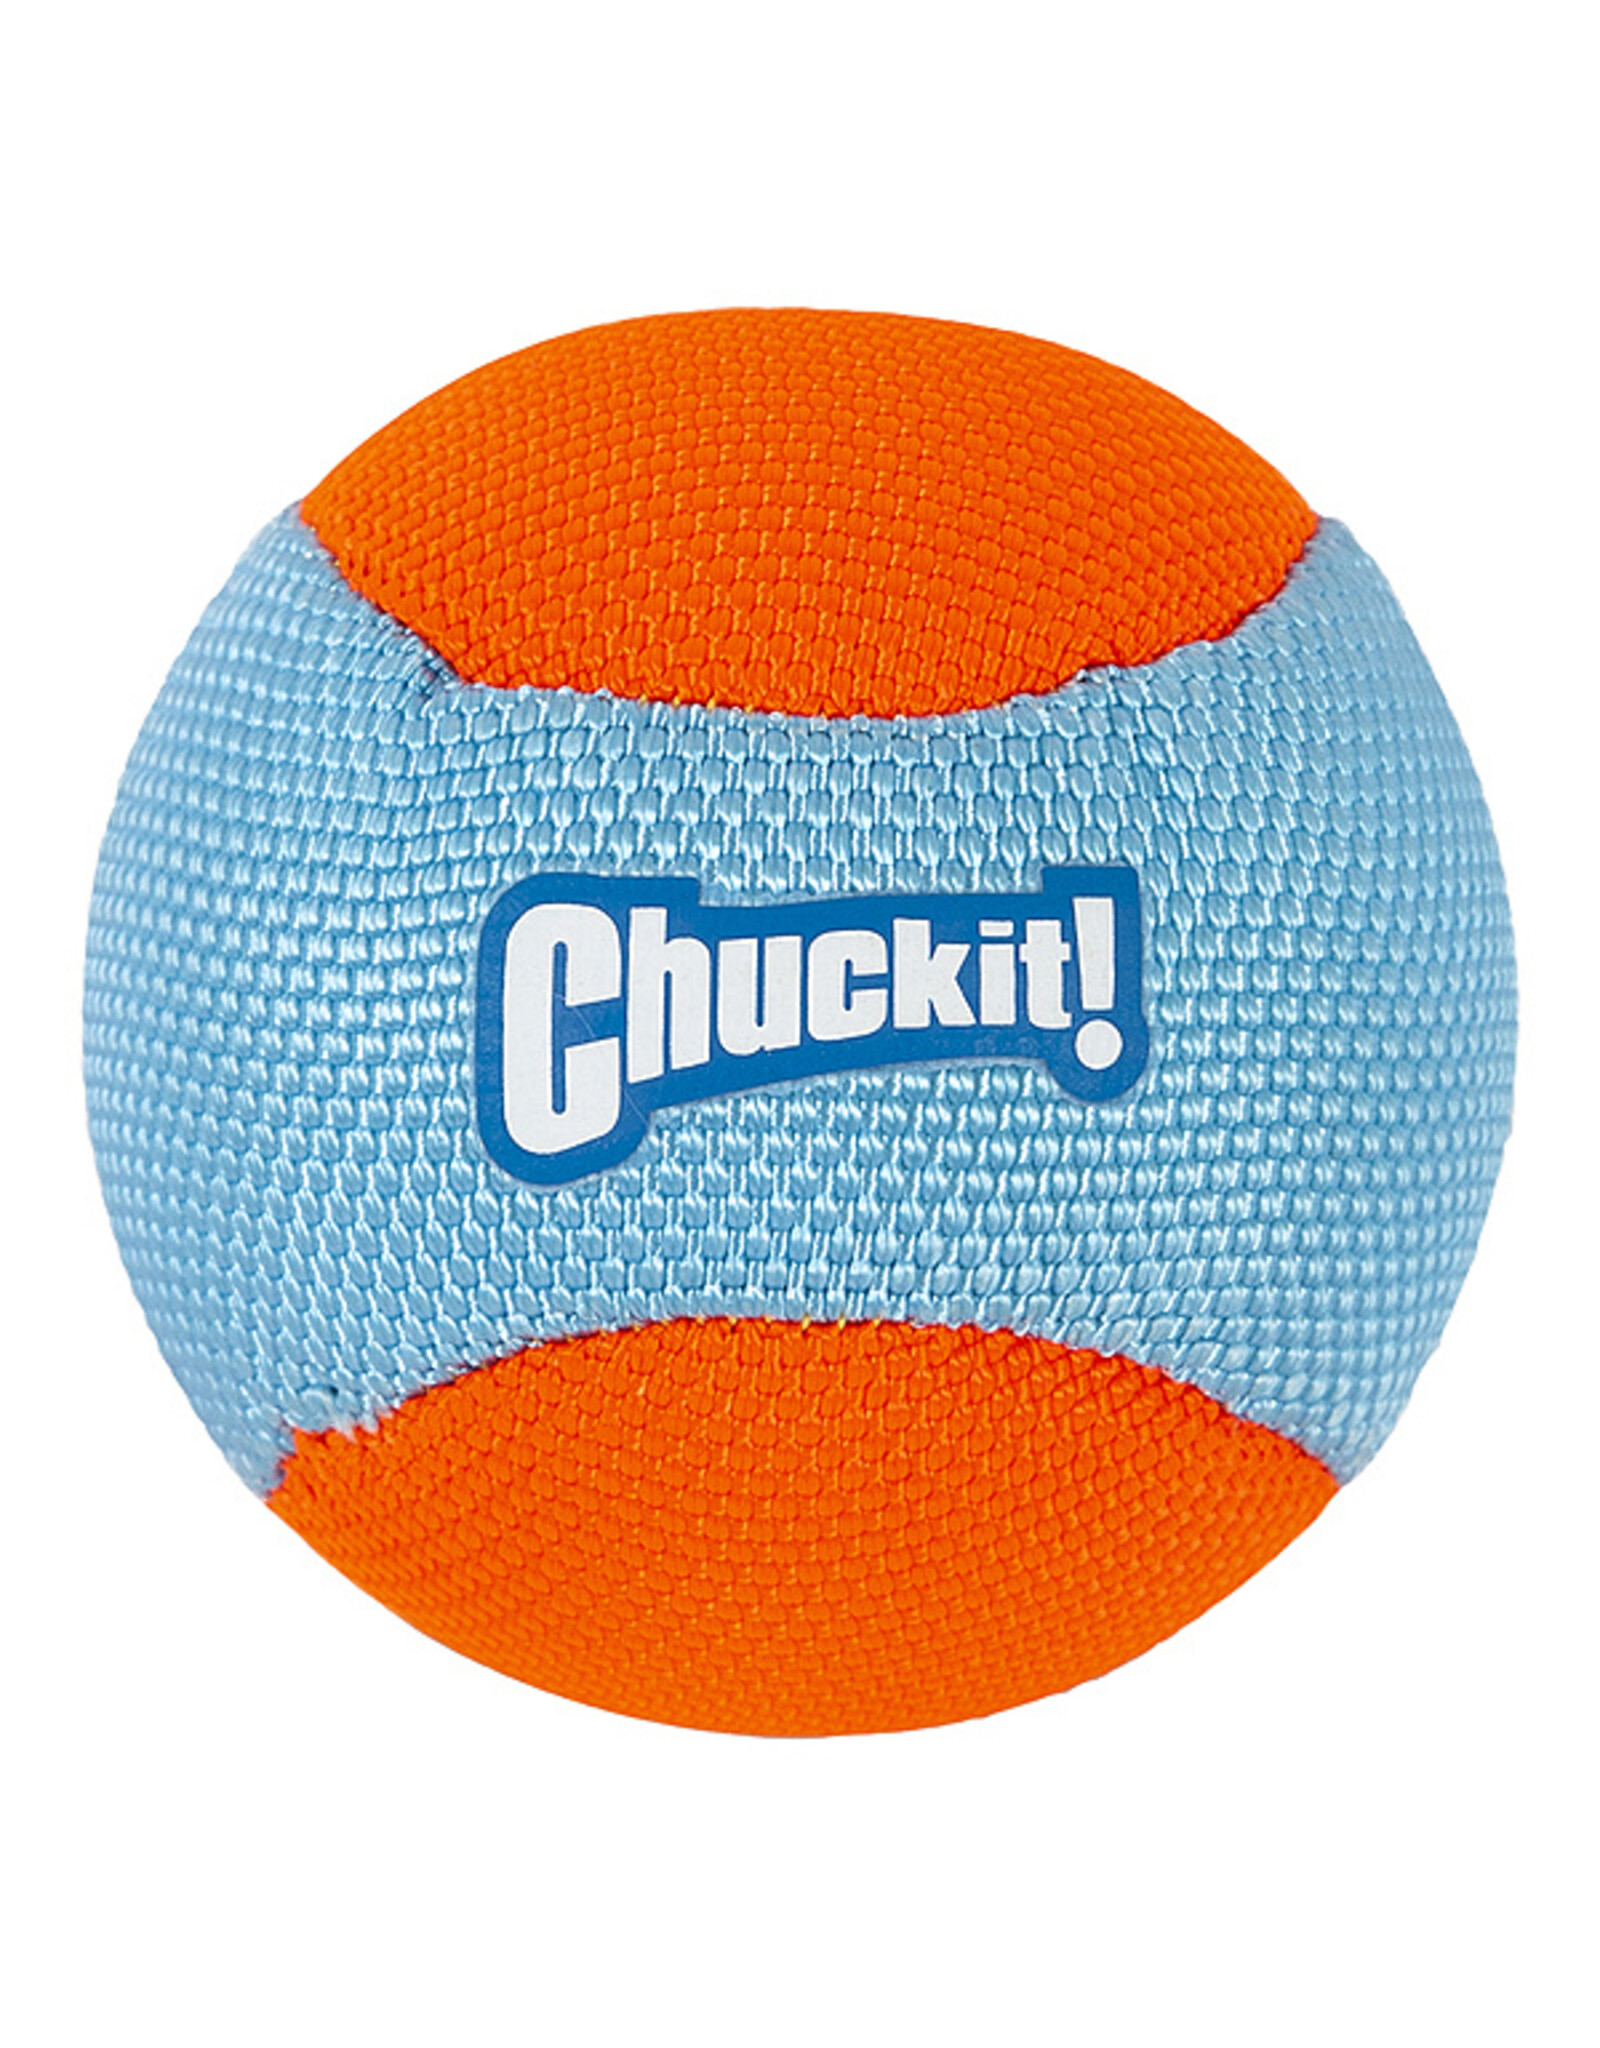 Chuck It! Amphibious Balls 3PK